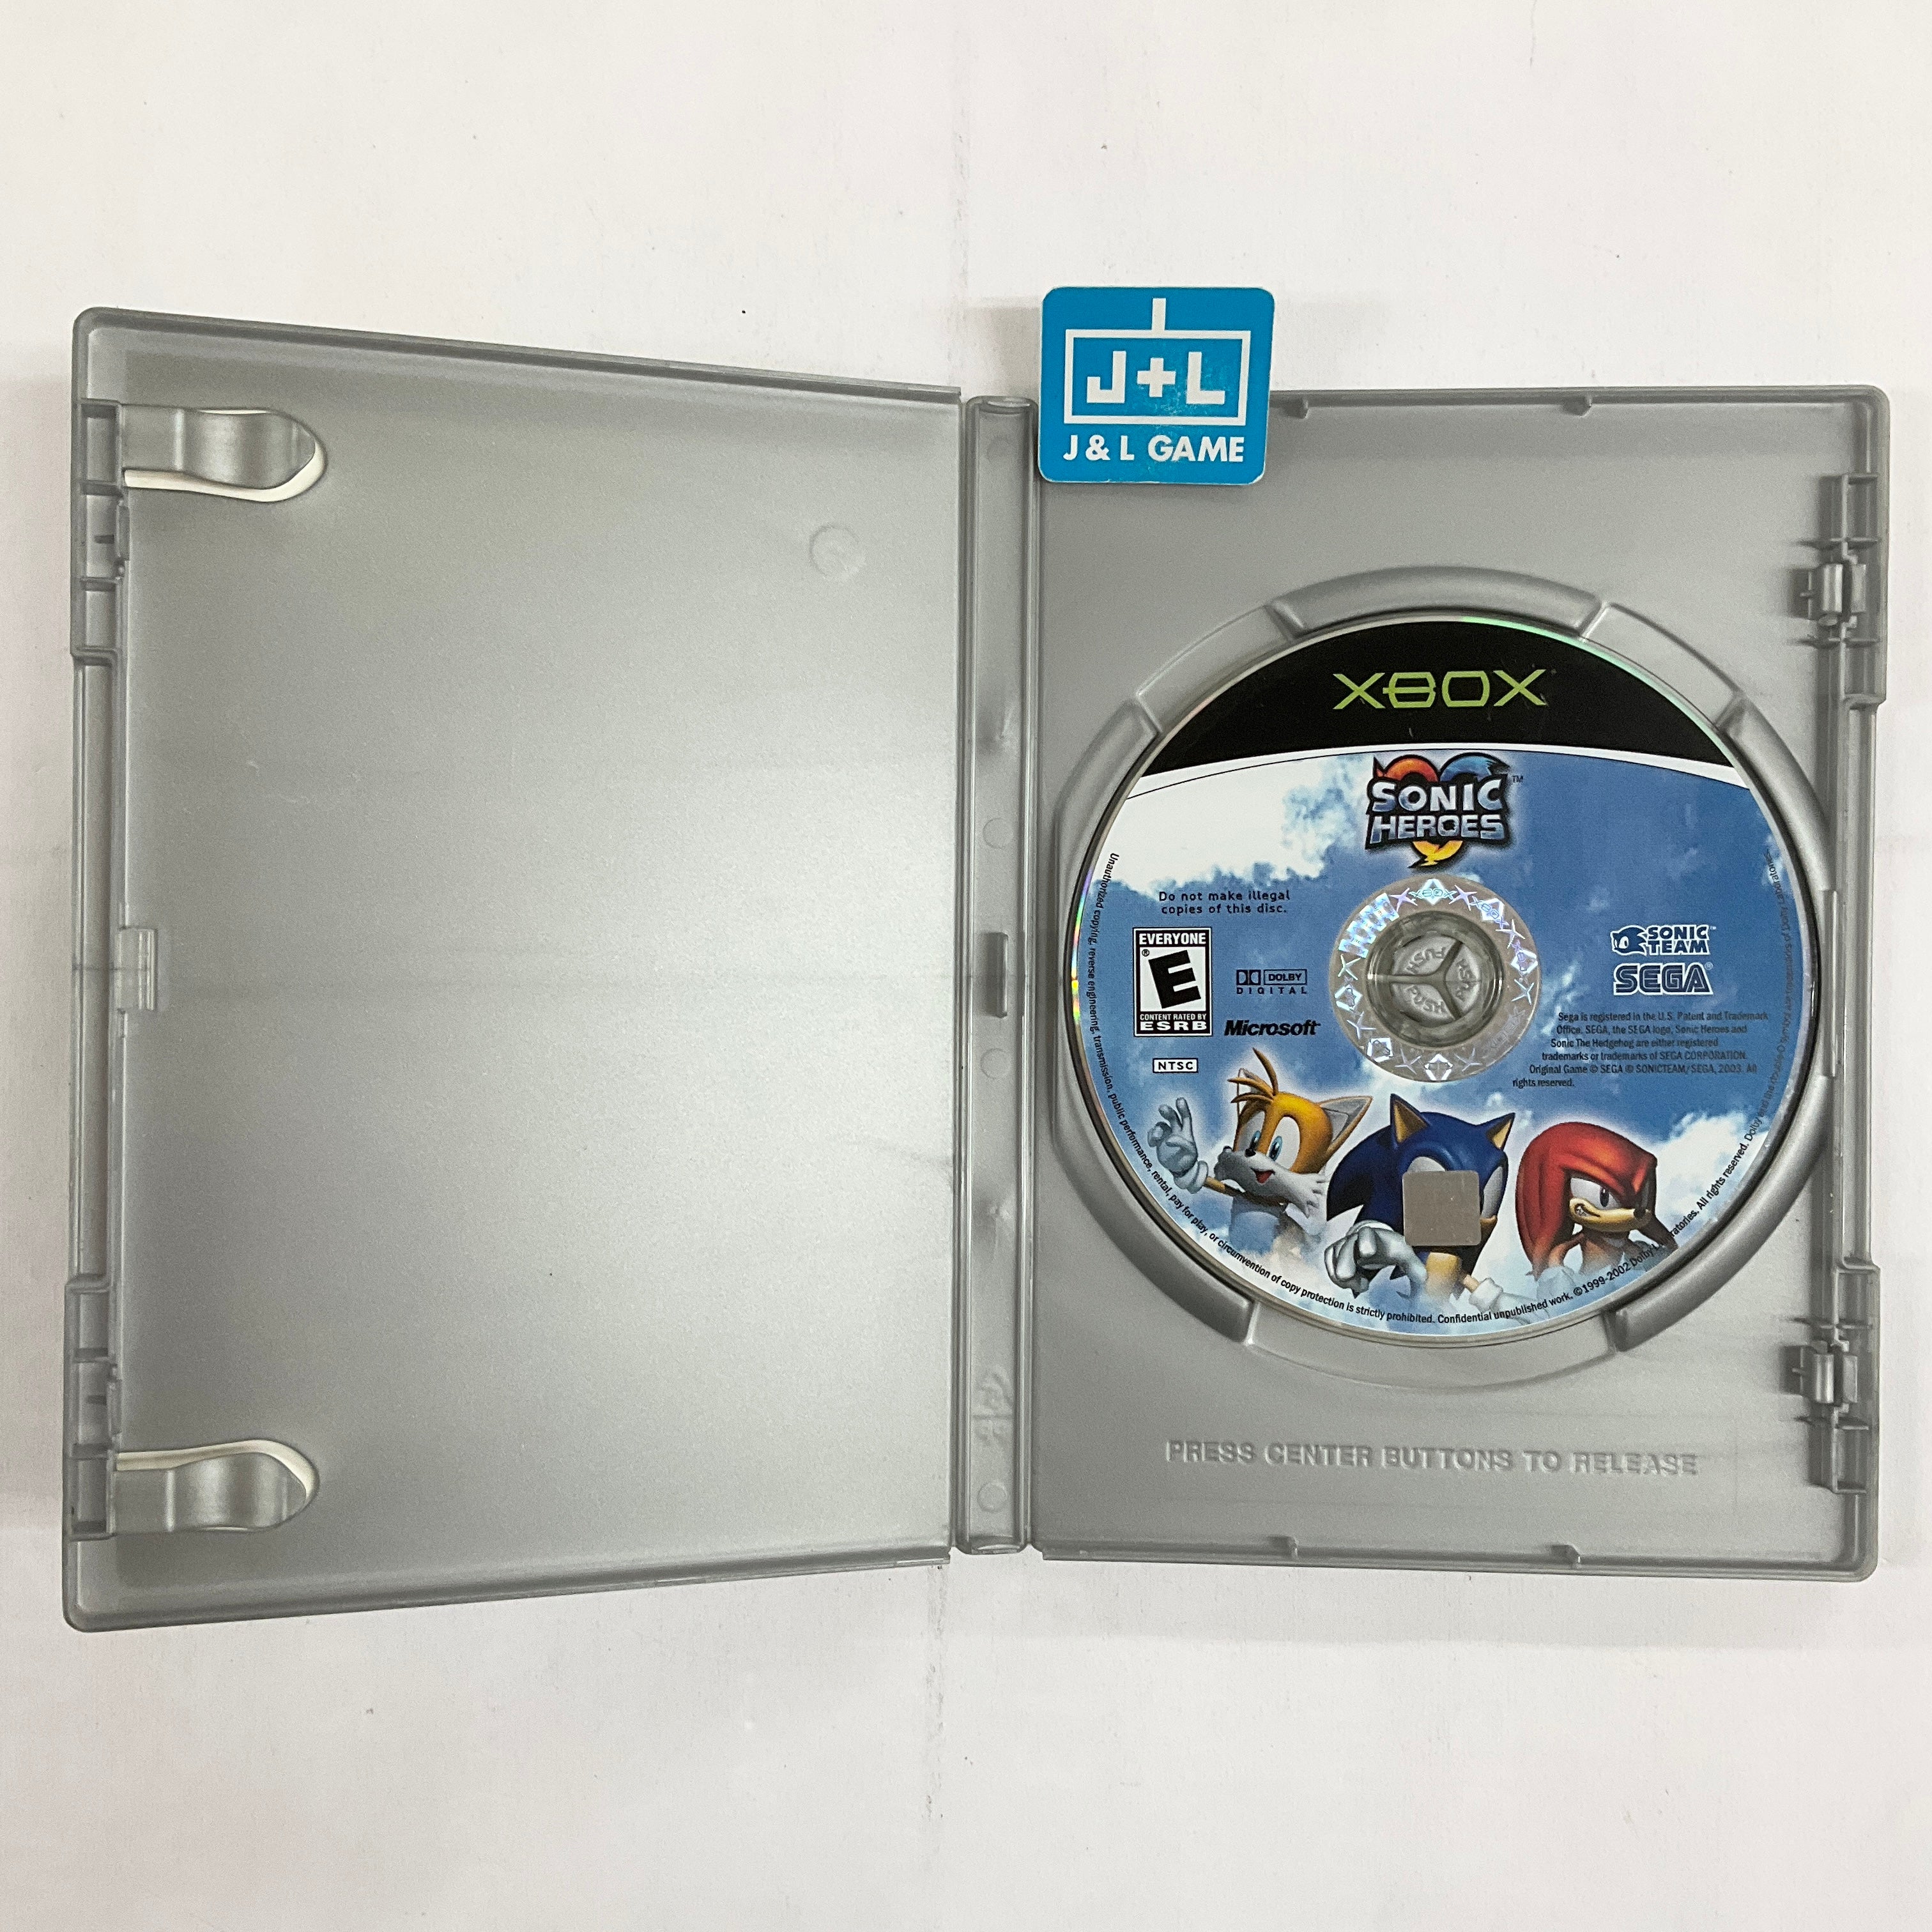 Sonic Heroes (Platinum Family Hits) - (XB) Xbox [Pre-Owned] Video Games Sega   